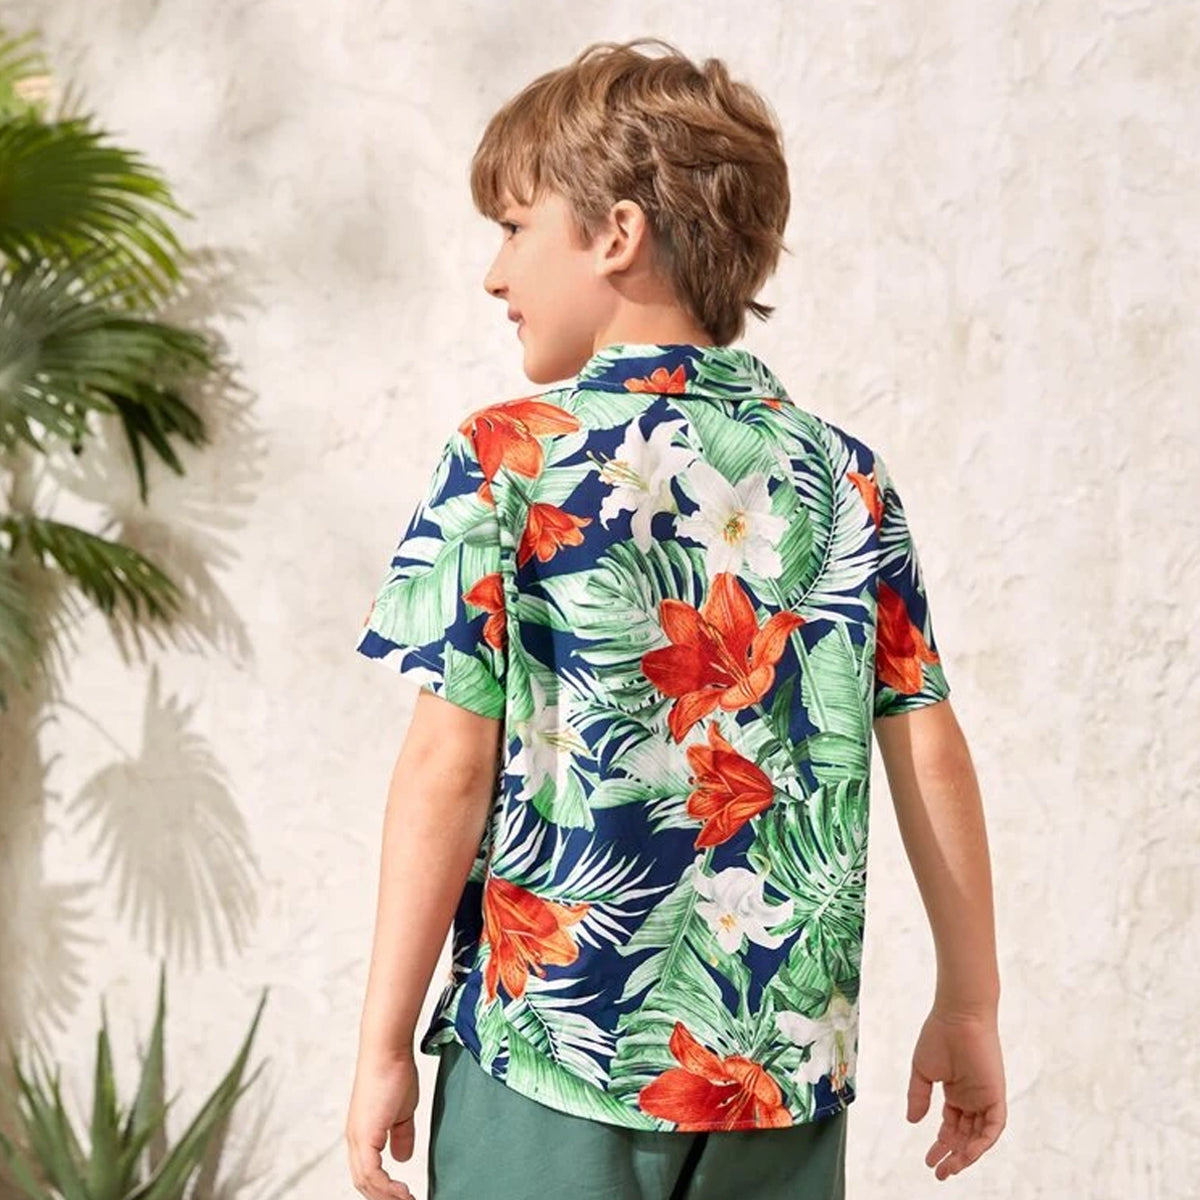 VENUTALOZA Sunshne Floral 1pc Tropical Print Shirt For Boys.